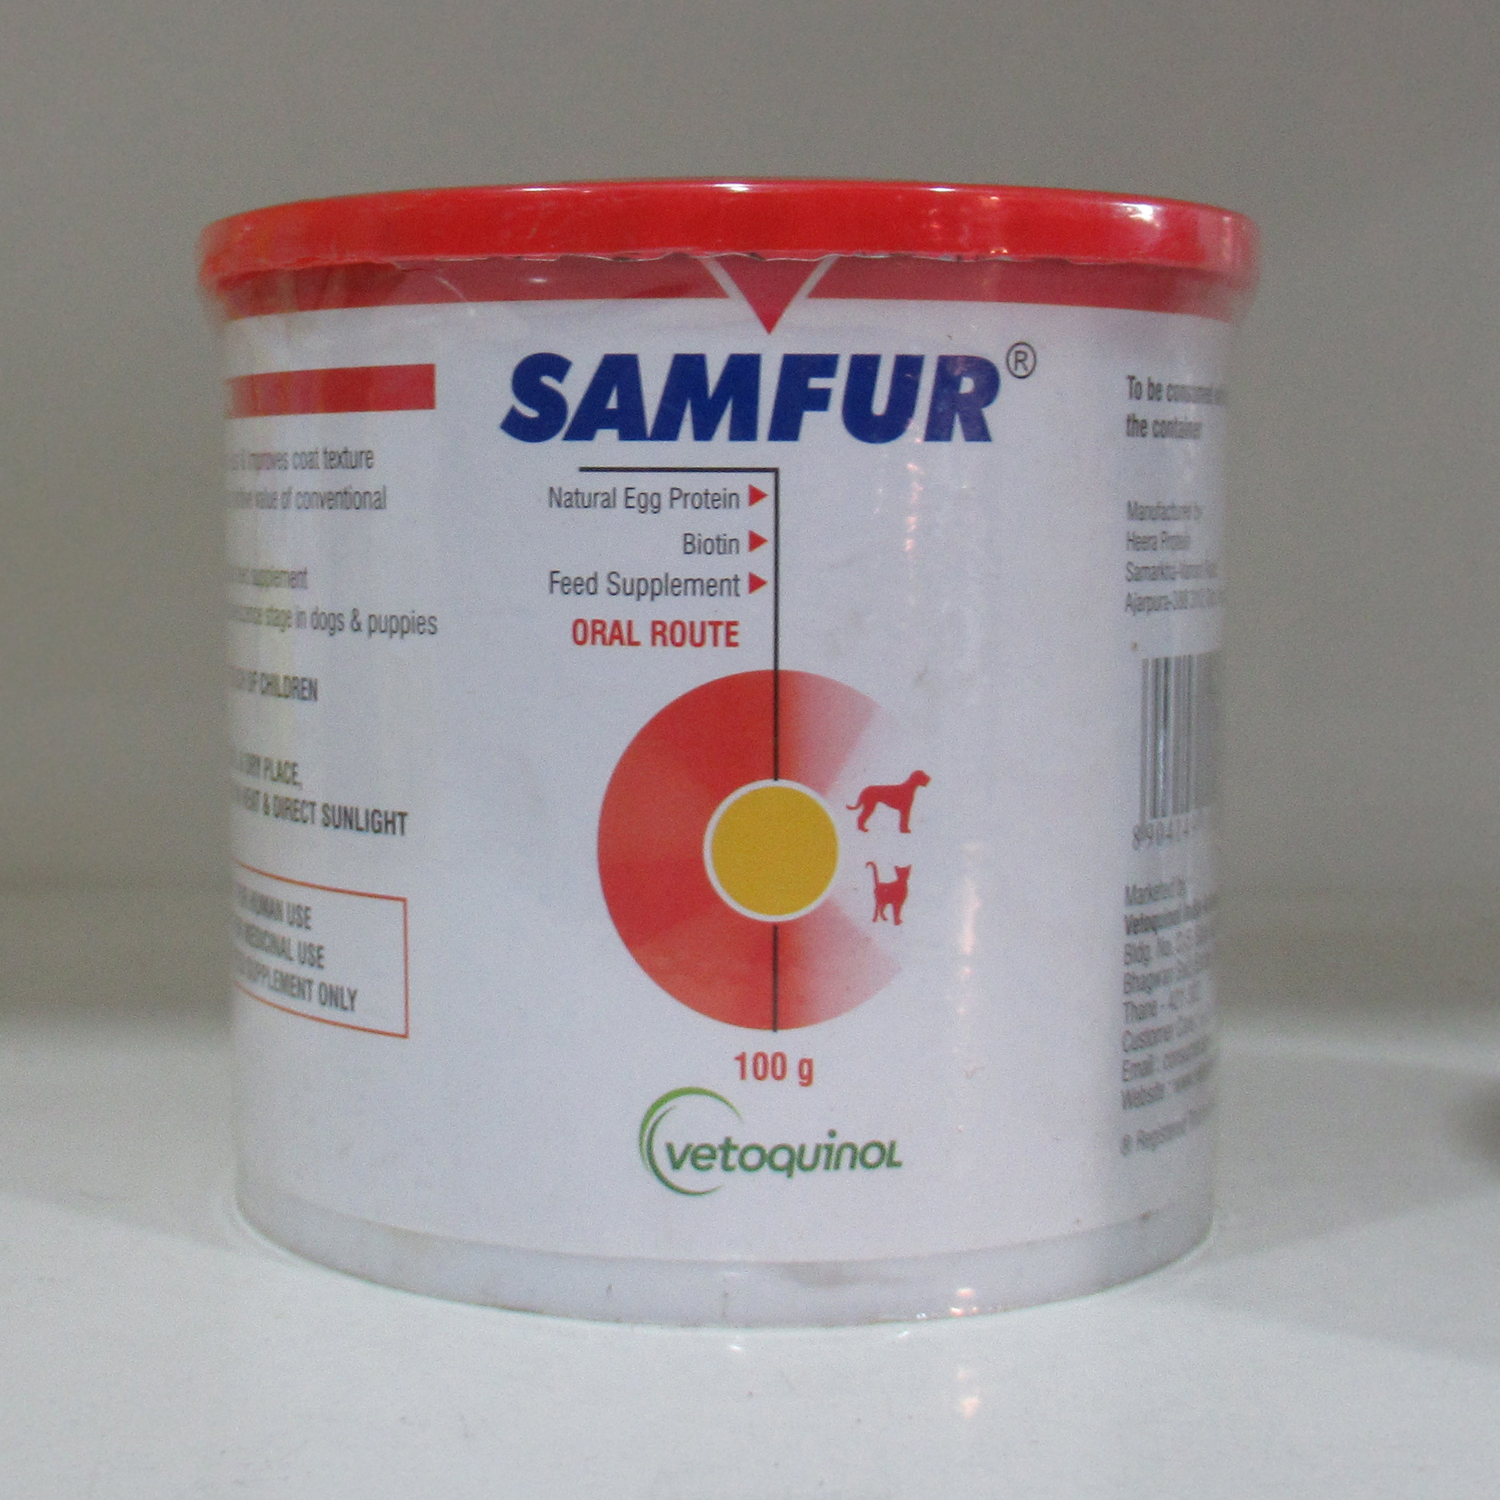 Buy Vetoquinol Samfur 100 g Online at Best Price in kerala from 